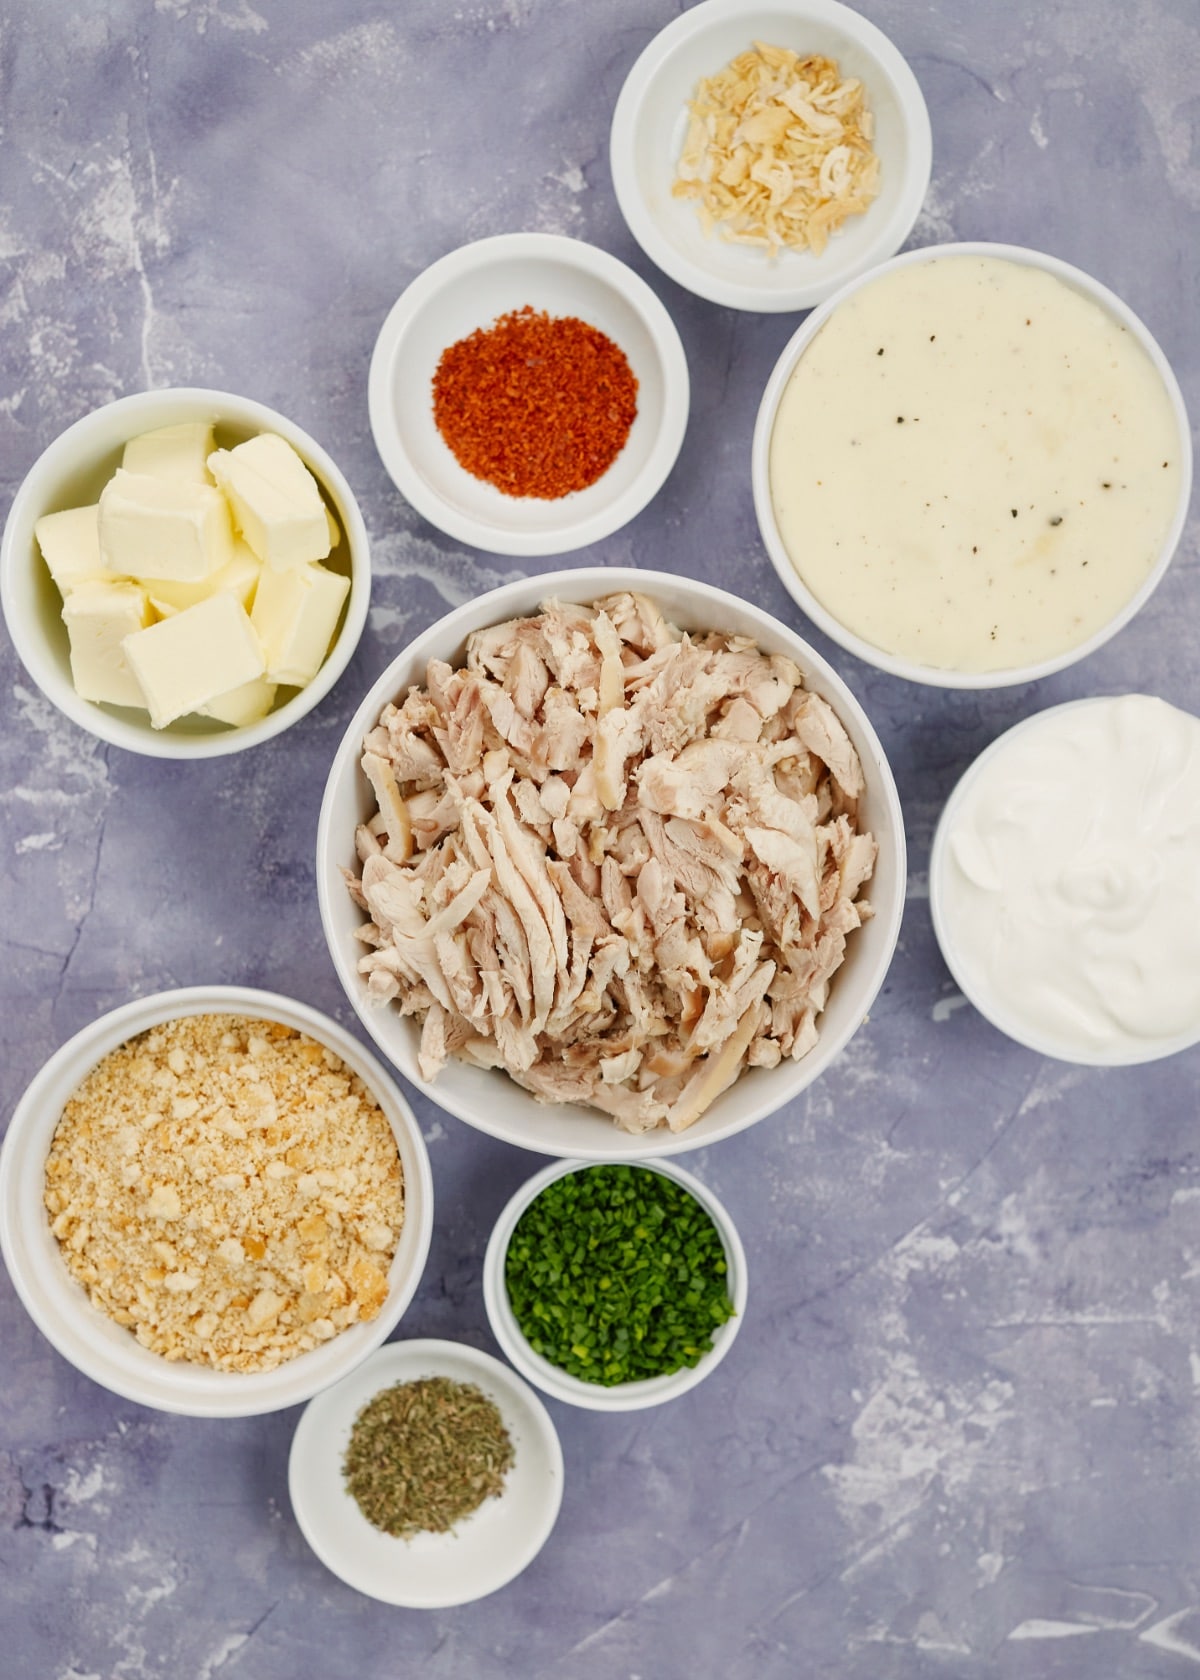 ingredients for creamy ritz chicken casserole in small white bowls